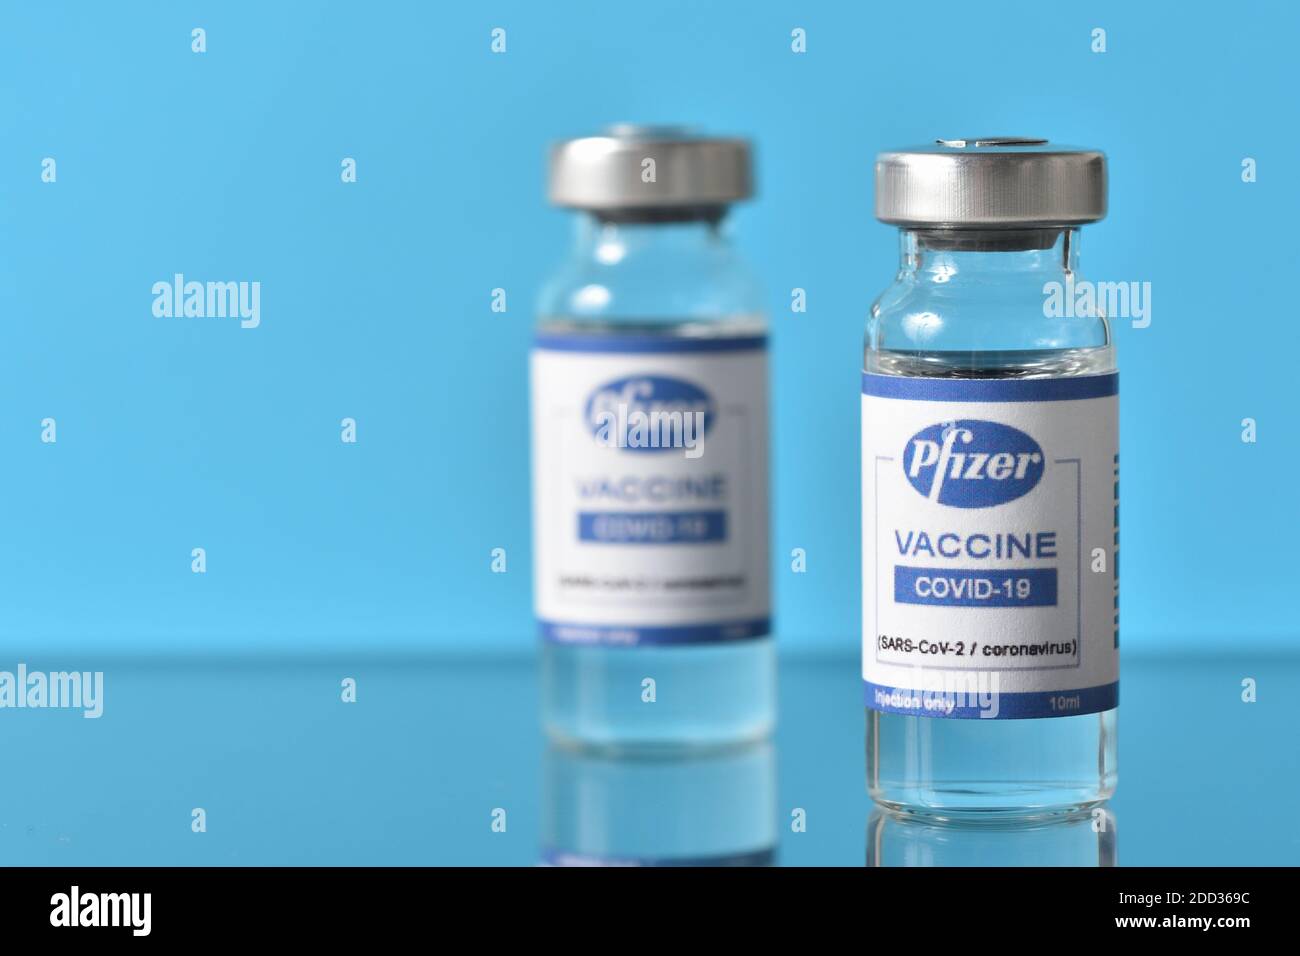 STARIY OSKOL, RUSSIA - NOVEMBER 23, 2020: Coronavirus vaccine announced by Pfizer and Biontech on blue background Stock Photo